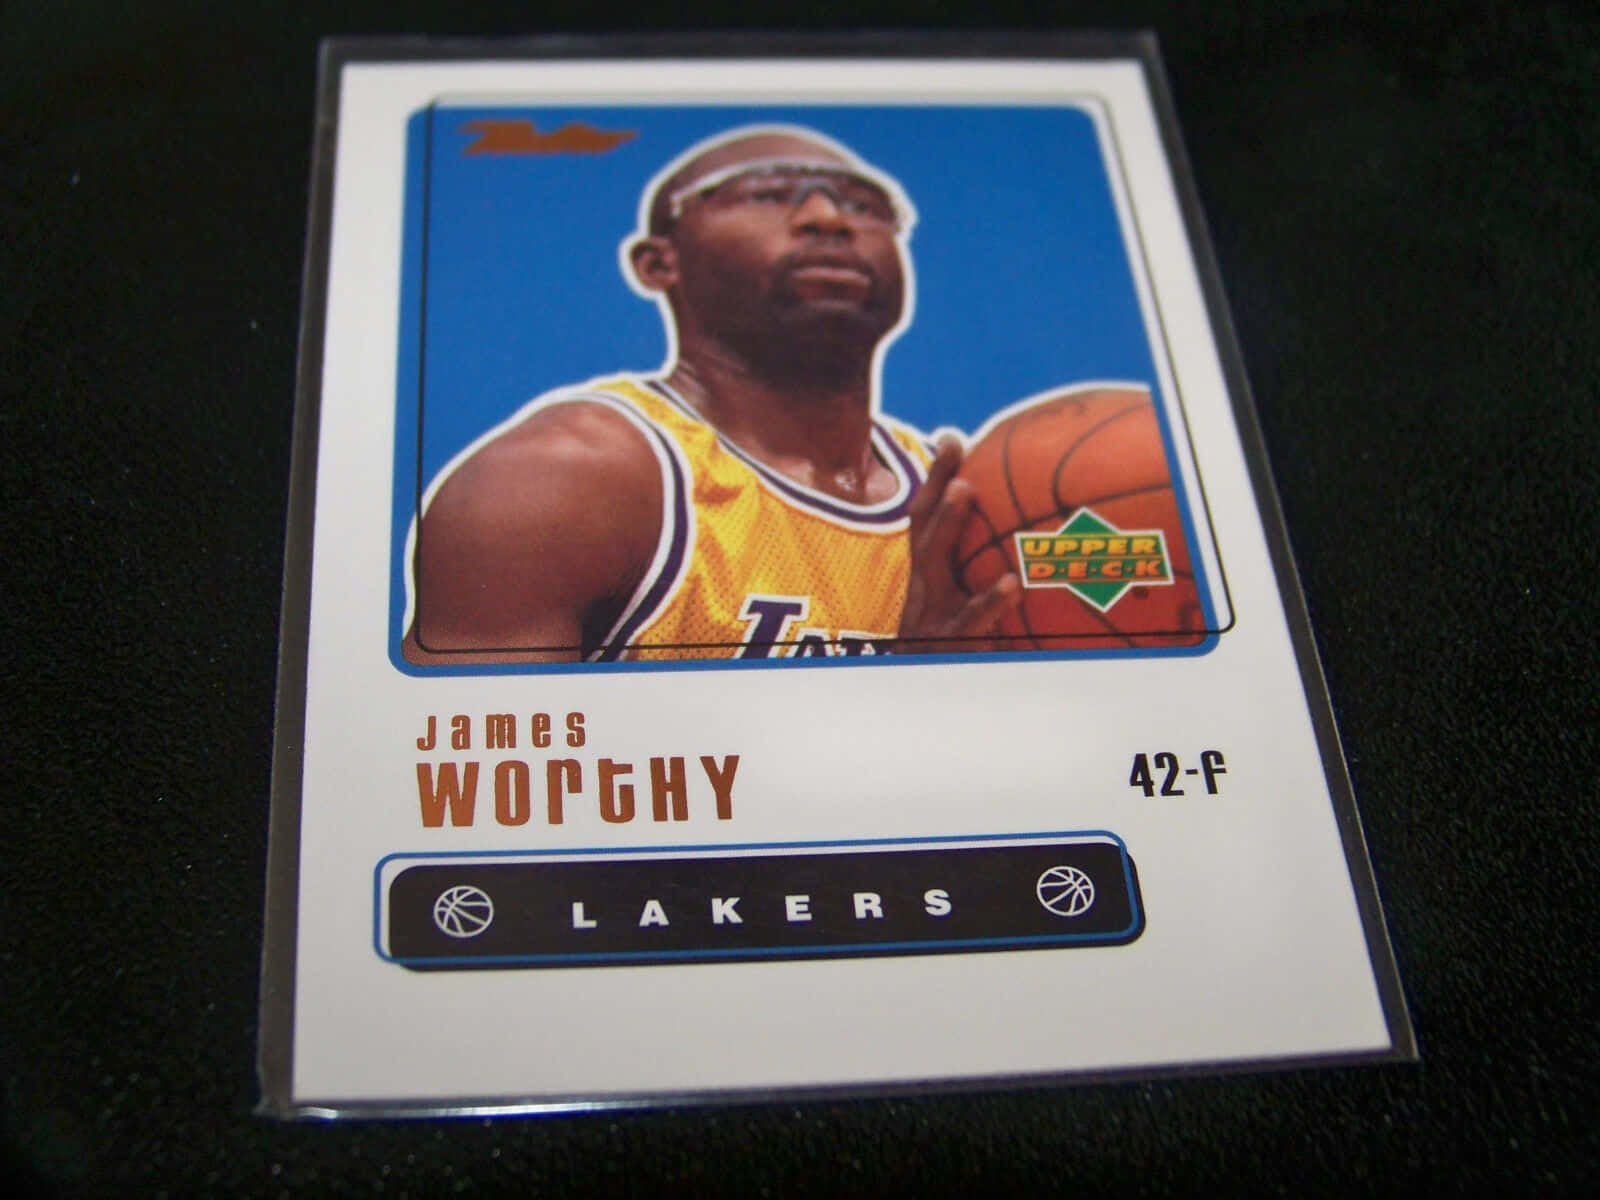 Cartolinafotografica Di James Worthy Dei Lakers Nba. Sfondo